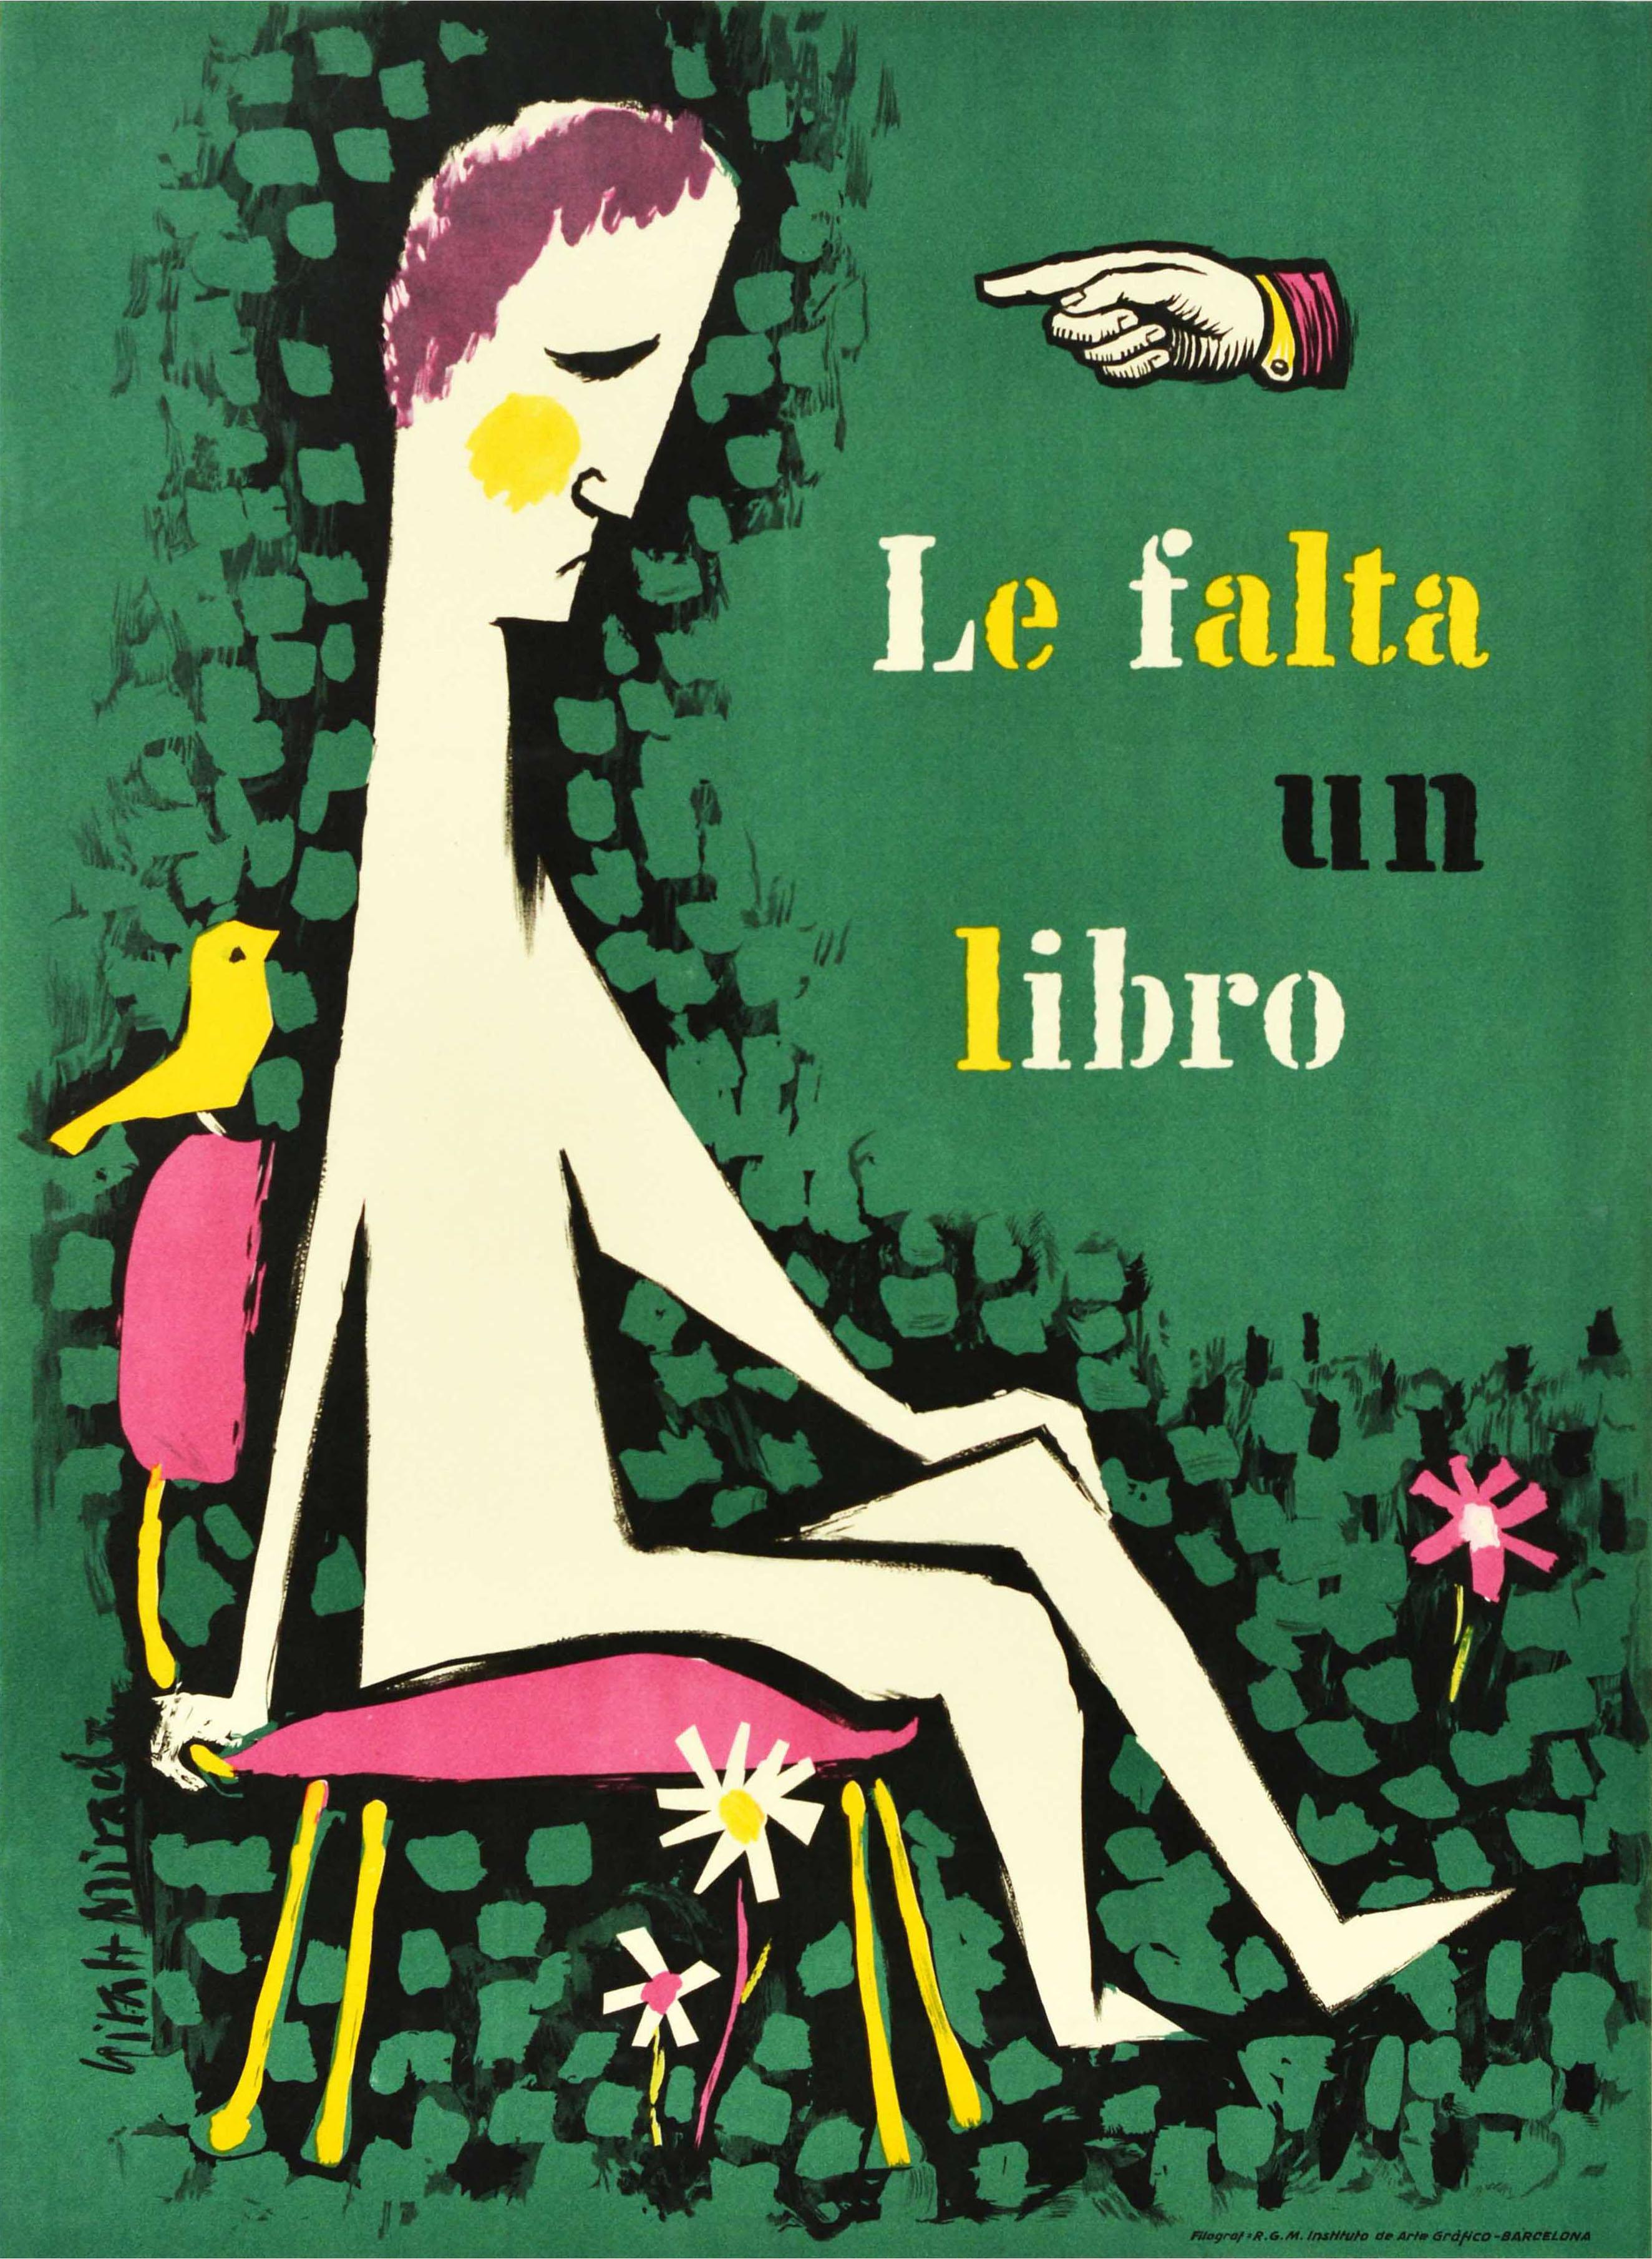 Ricard Giralt Miracle Print - Original Vintage Poster Le Falta Un Libro Book Is Missing Reading Promotion Art